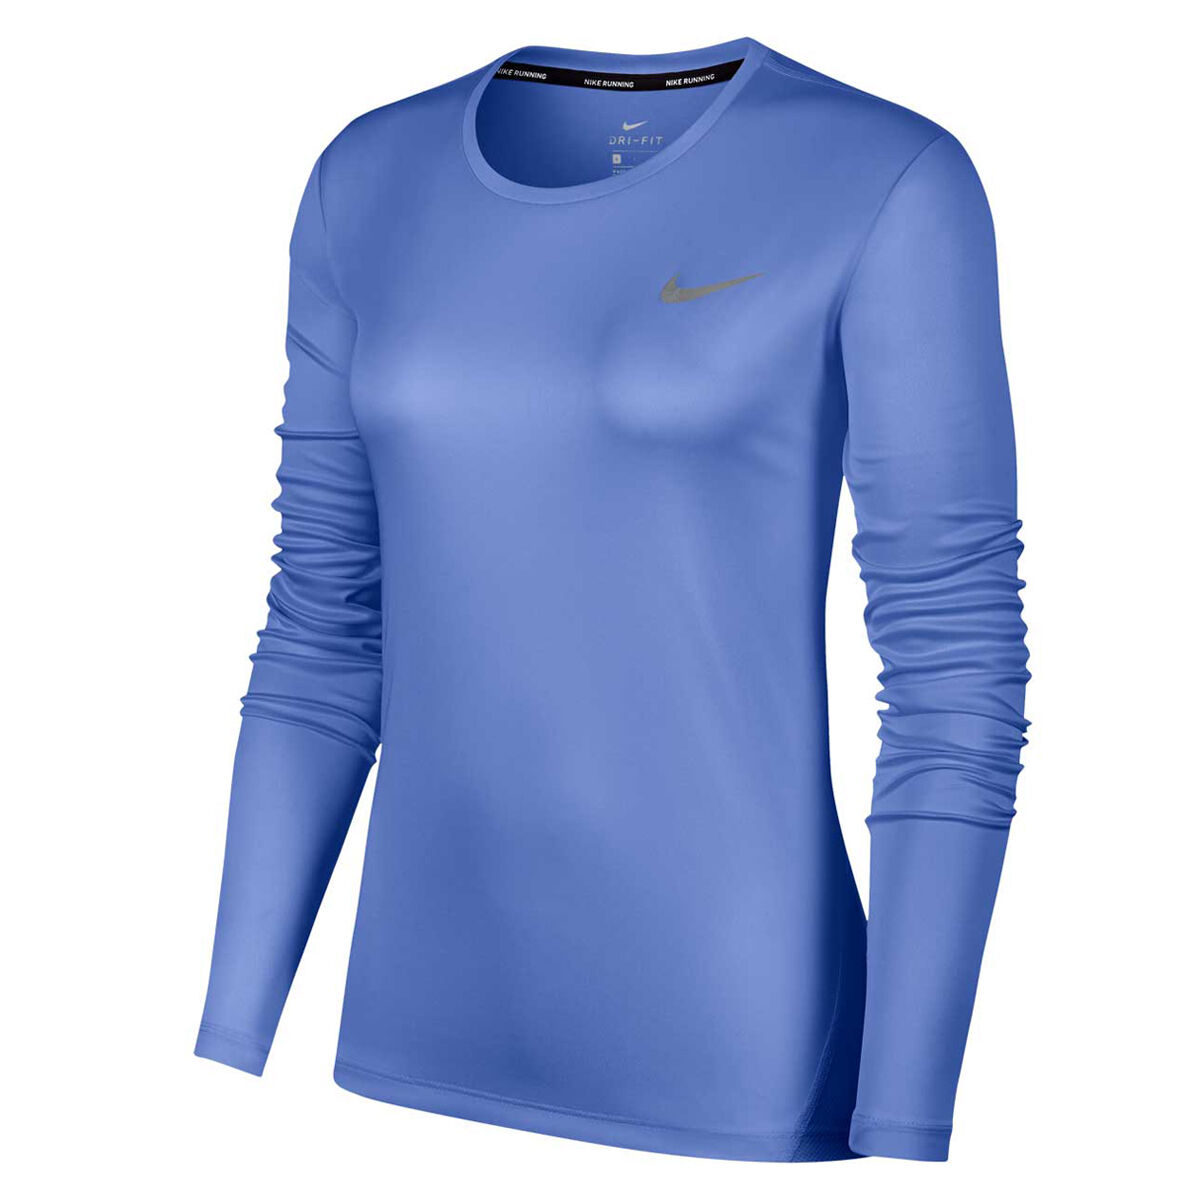 Nike Womens Miler Running Top Blue S 